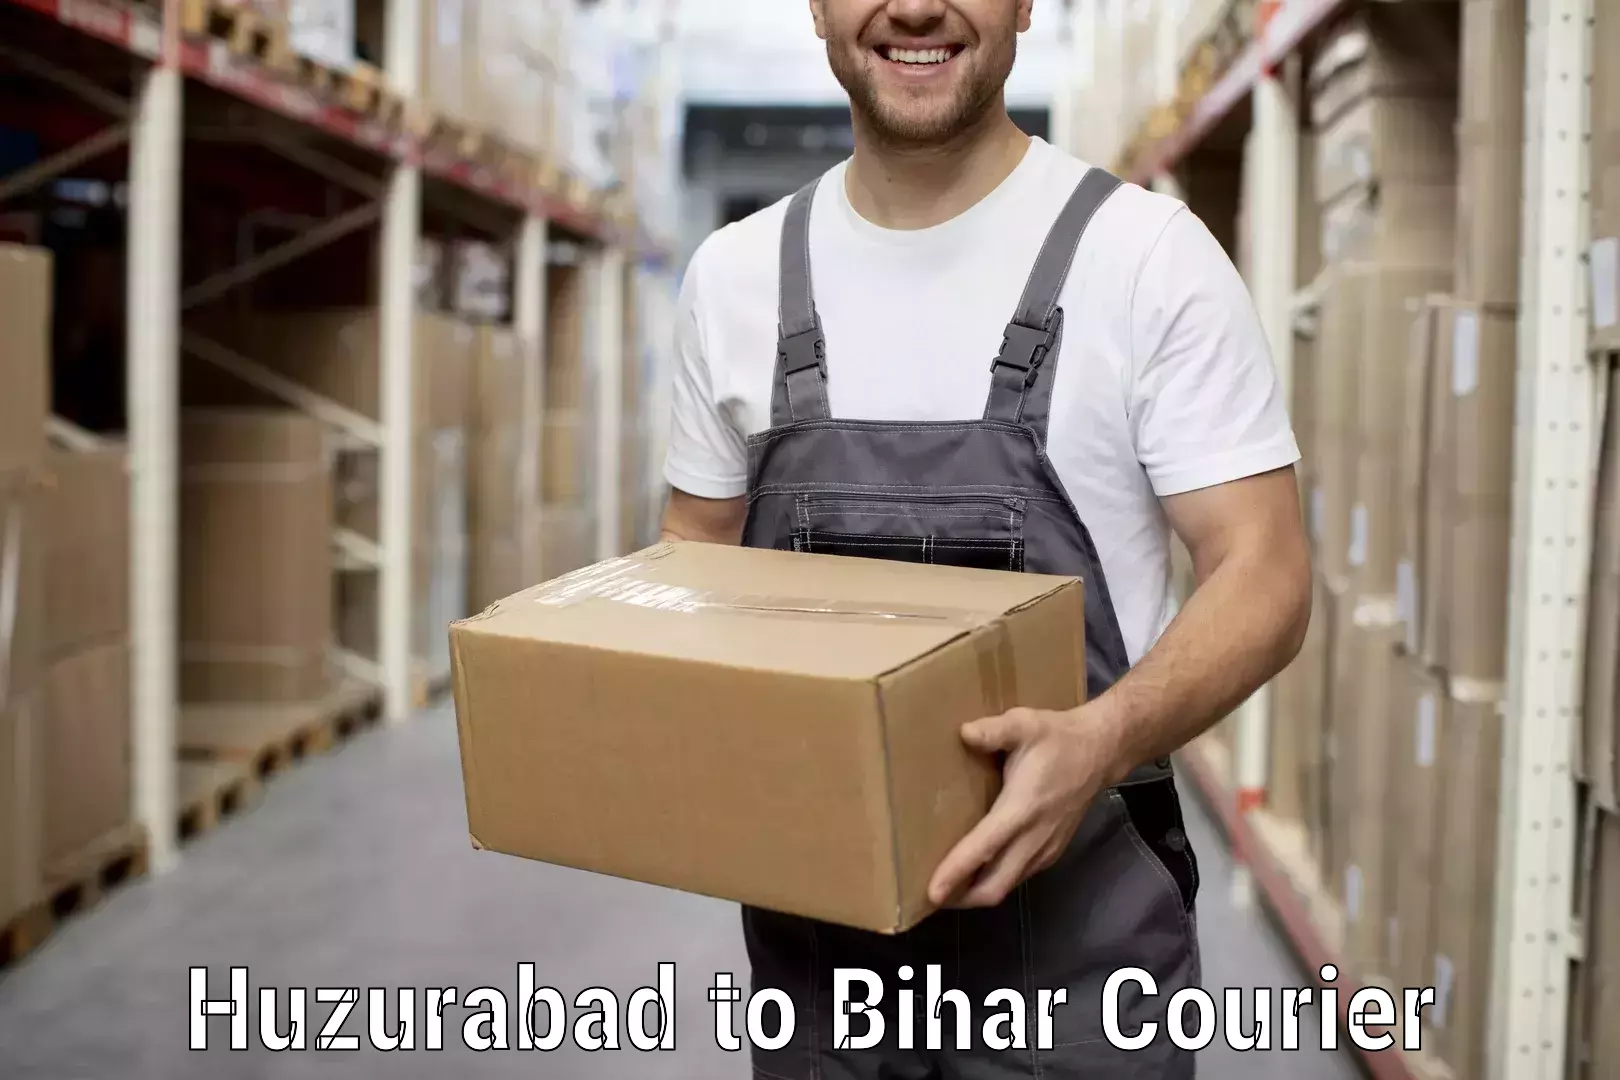 Professional furniture movers Huzurabad to Bankipore